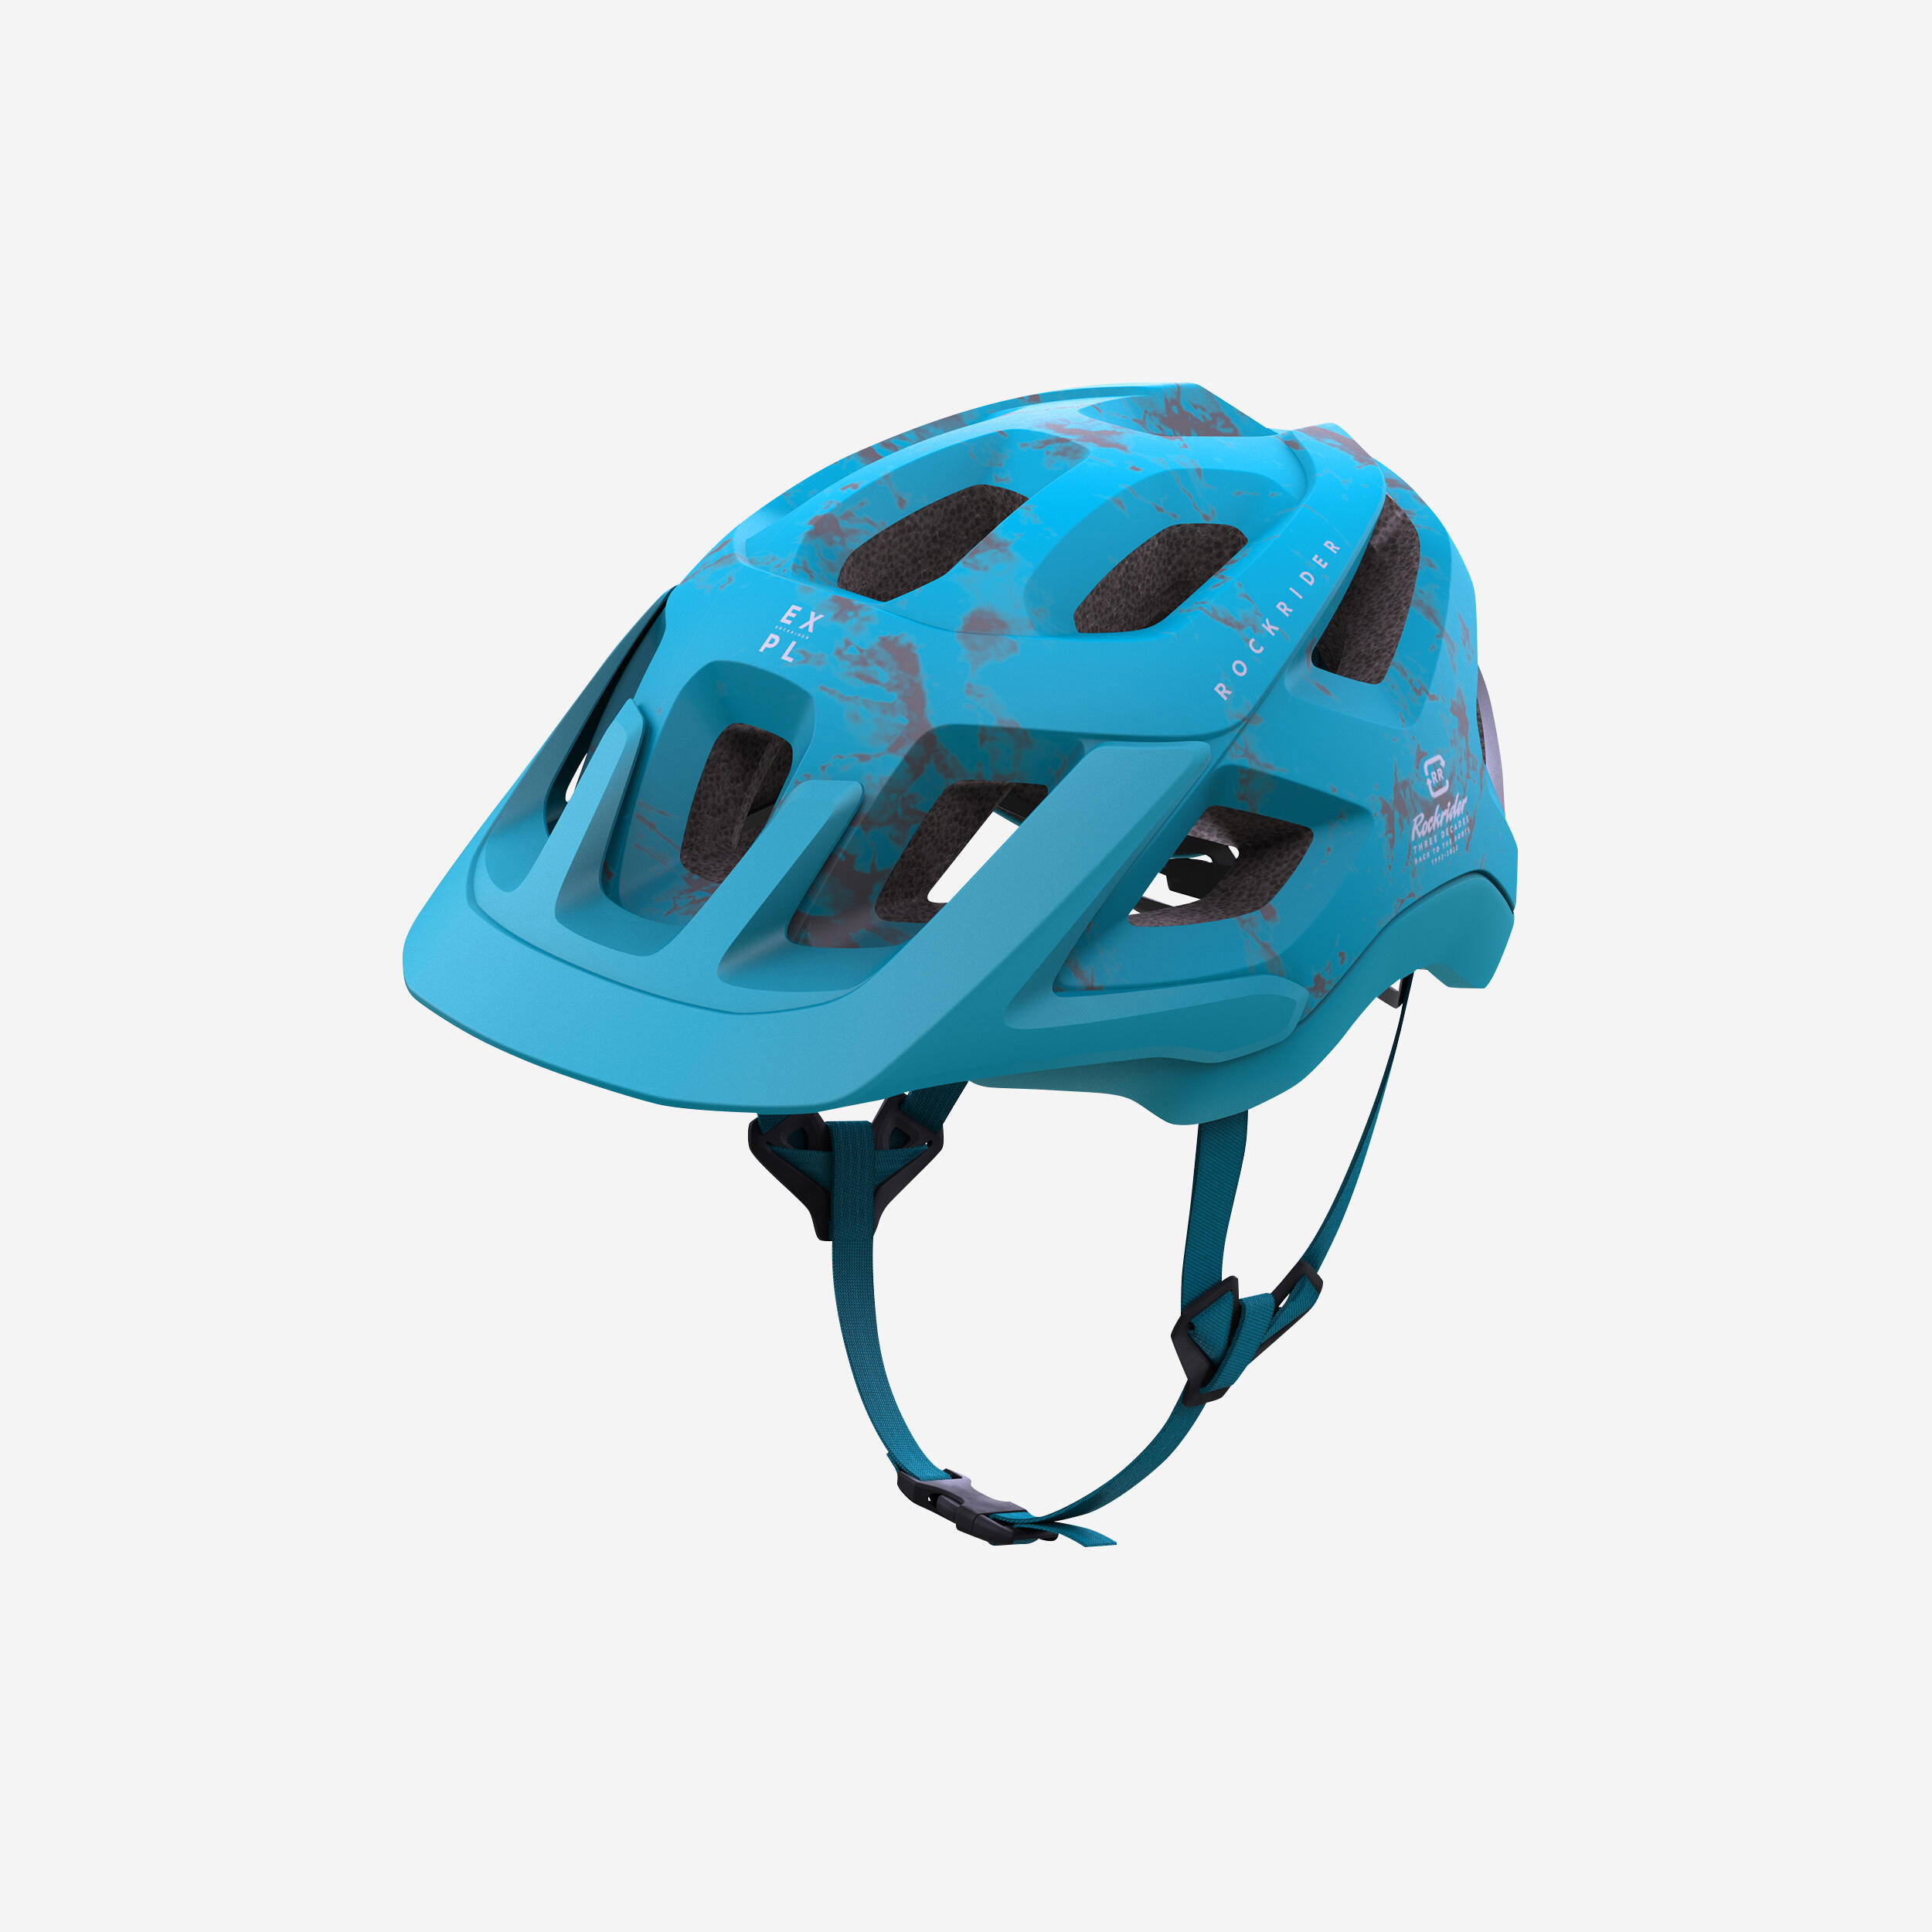 Mountain Bike Helmet EXPL 500 - Turquoise 1/18